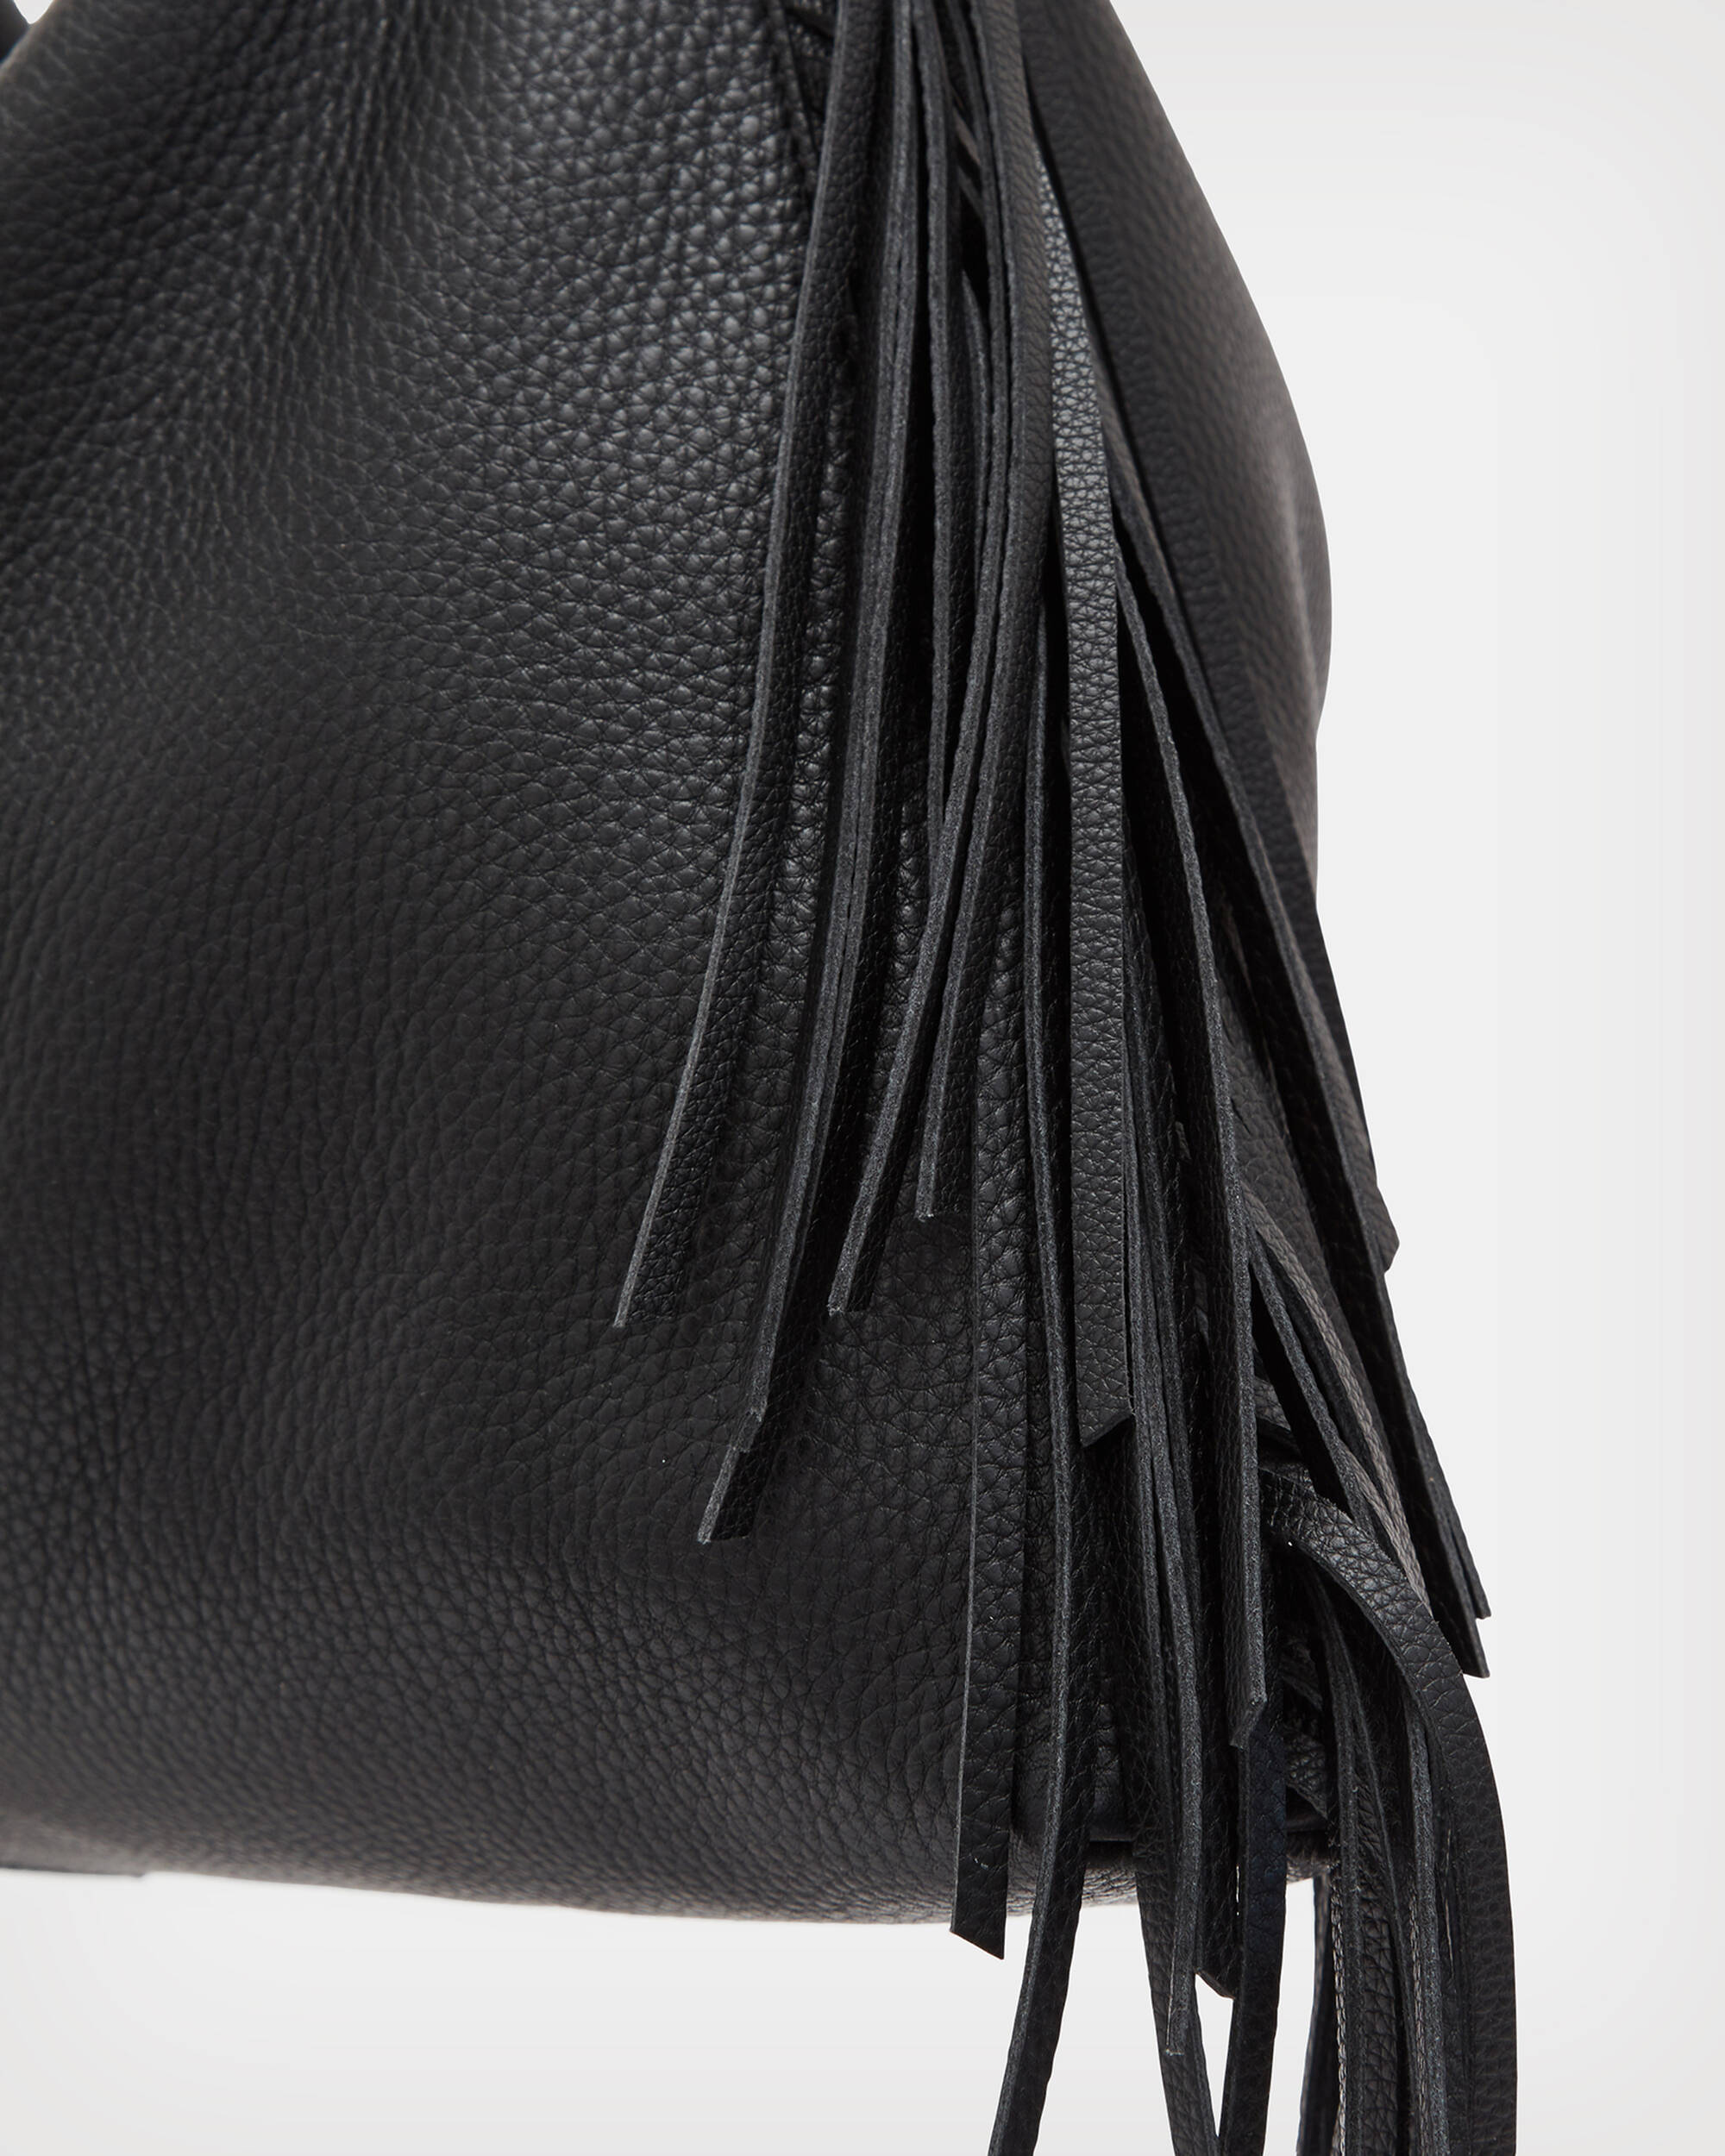 Edbury Leather Fringed Shoulder Bag  large image number 5